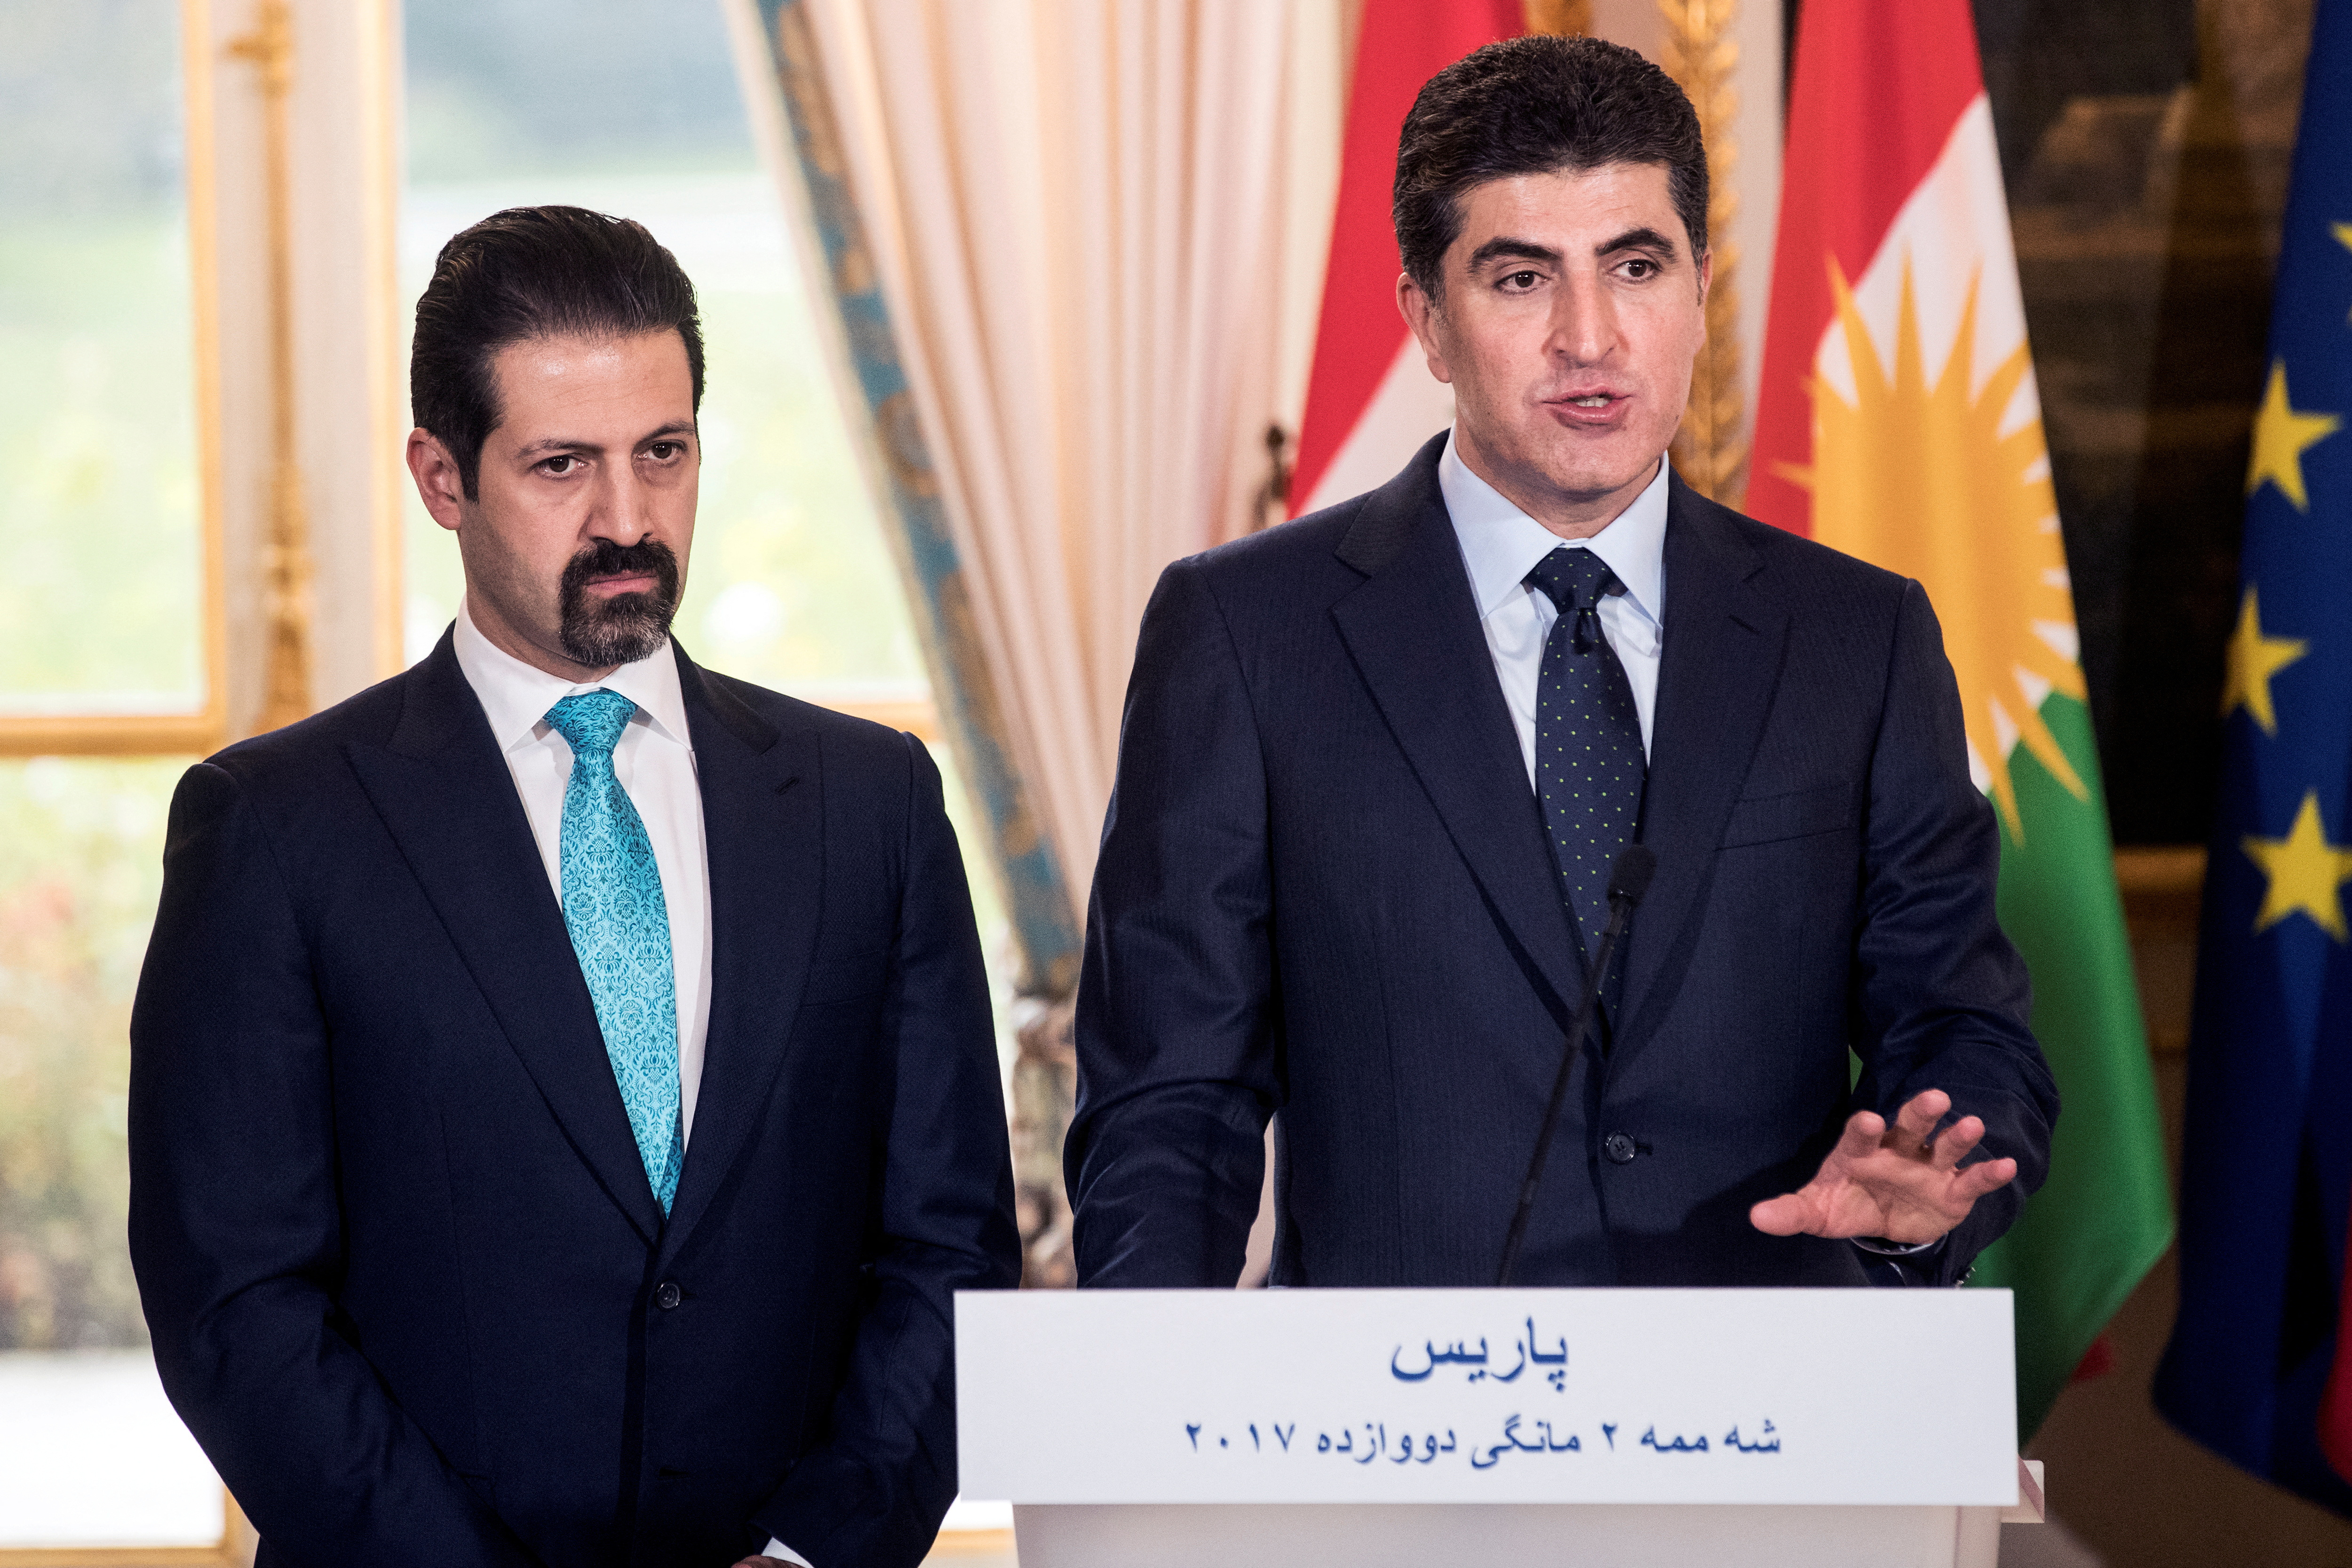 Kurdish region's Prime Minister Nechirvan Barzani and Iraqi Kurdistan’s Deputy Prime Minister Qubad Talabani attend a press conference at the Elysee Palace in Paris